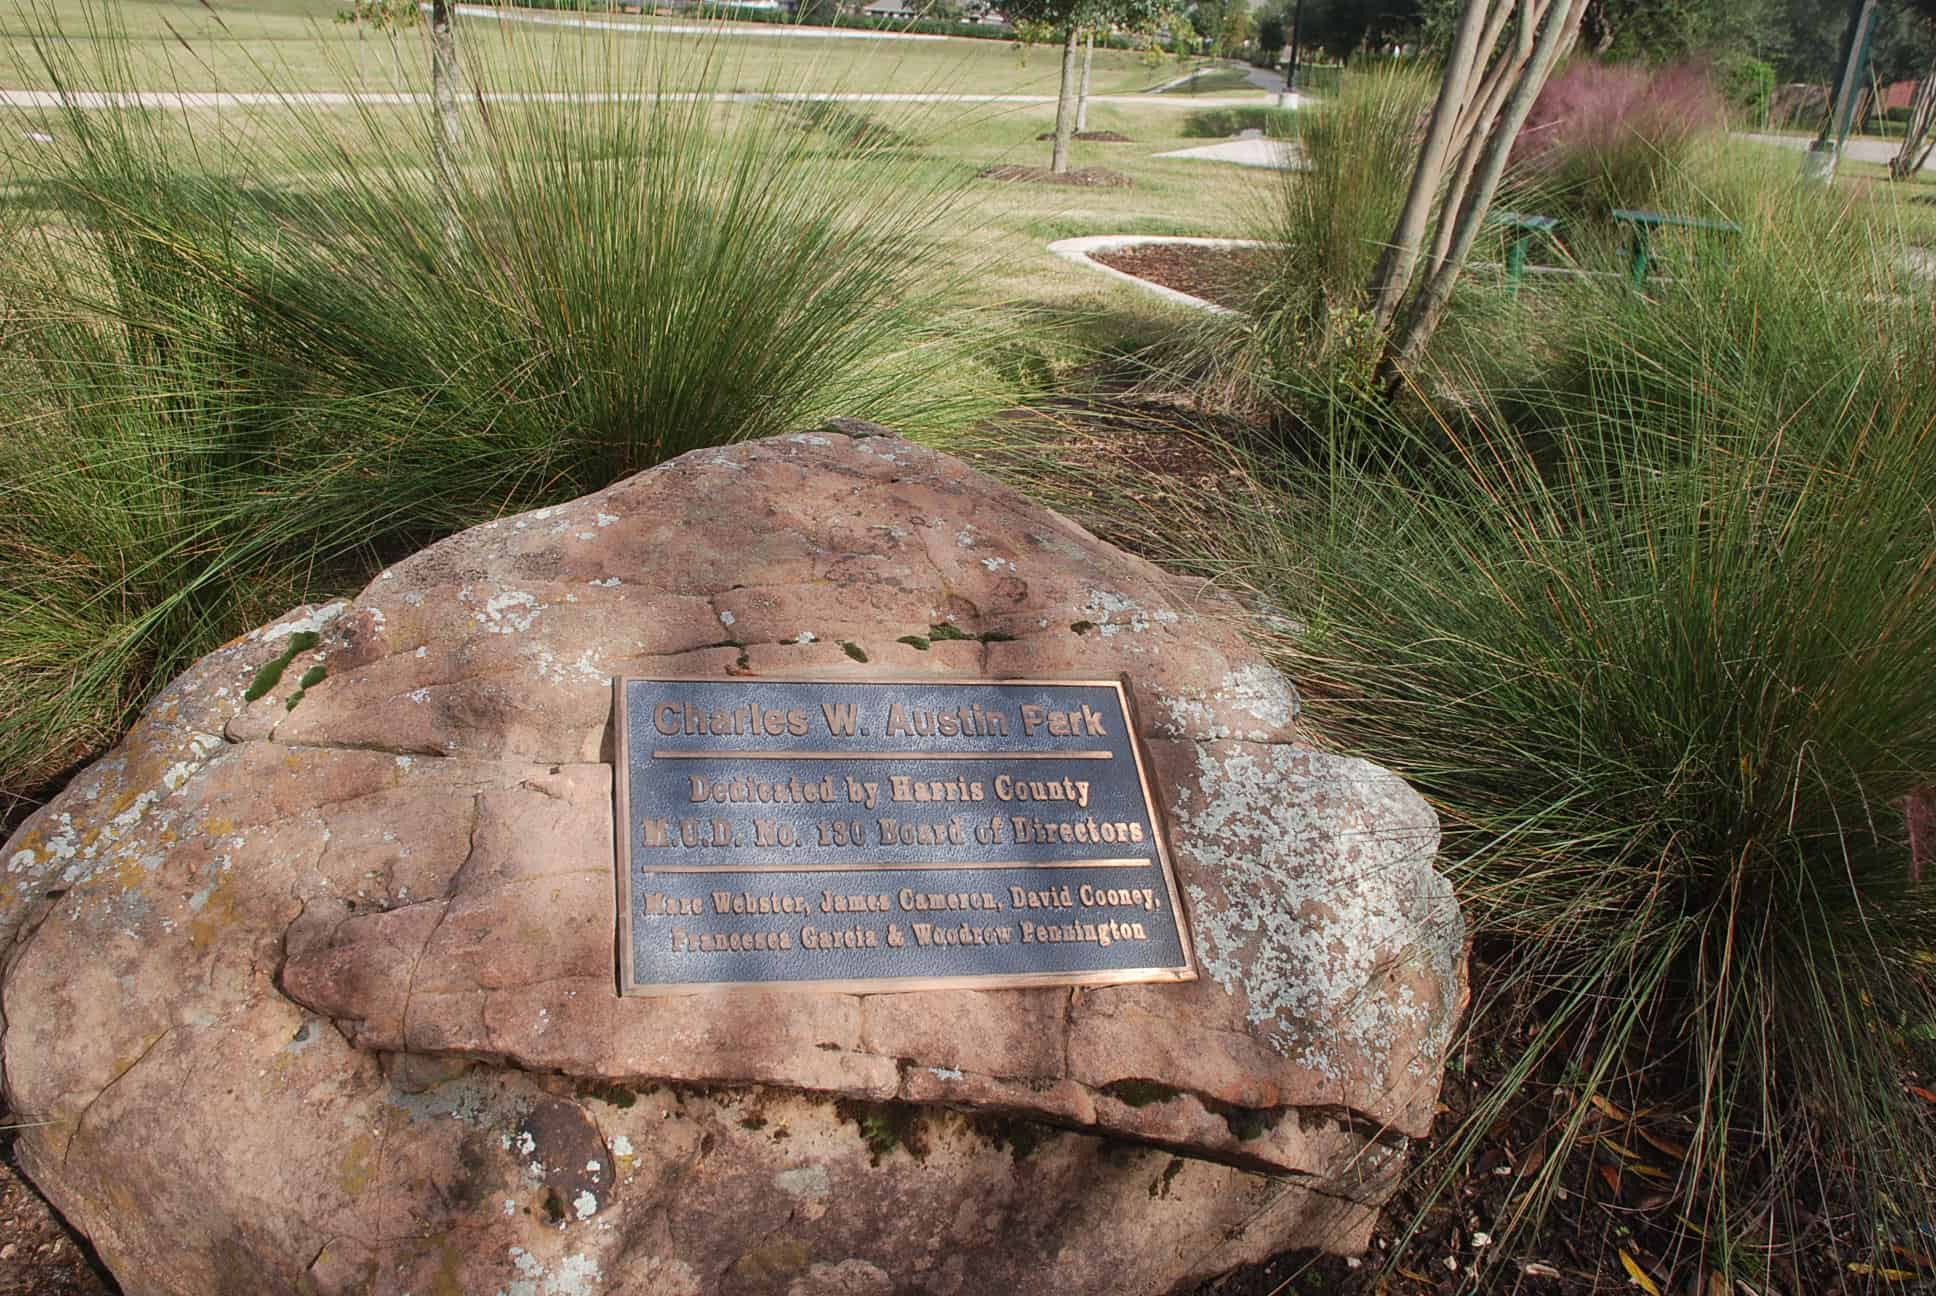 Charles W Austin Park Dedication plaque